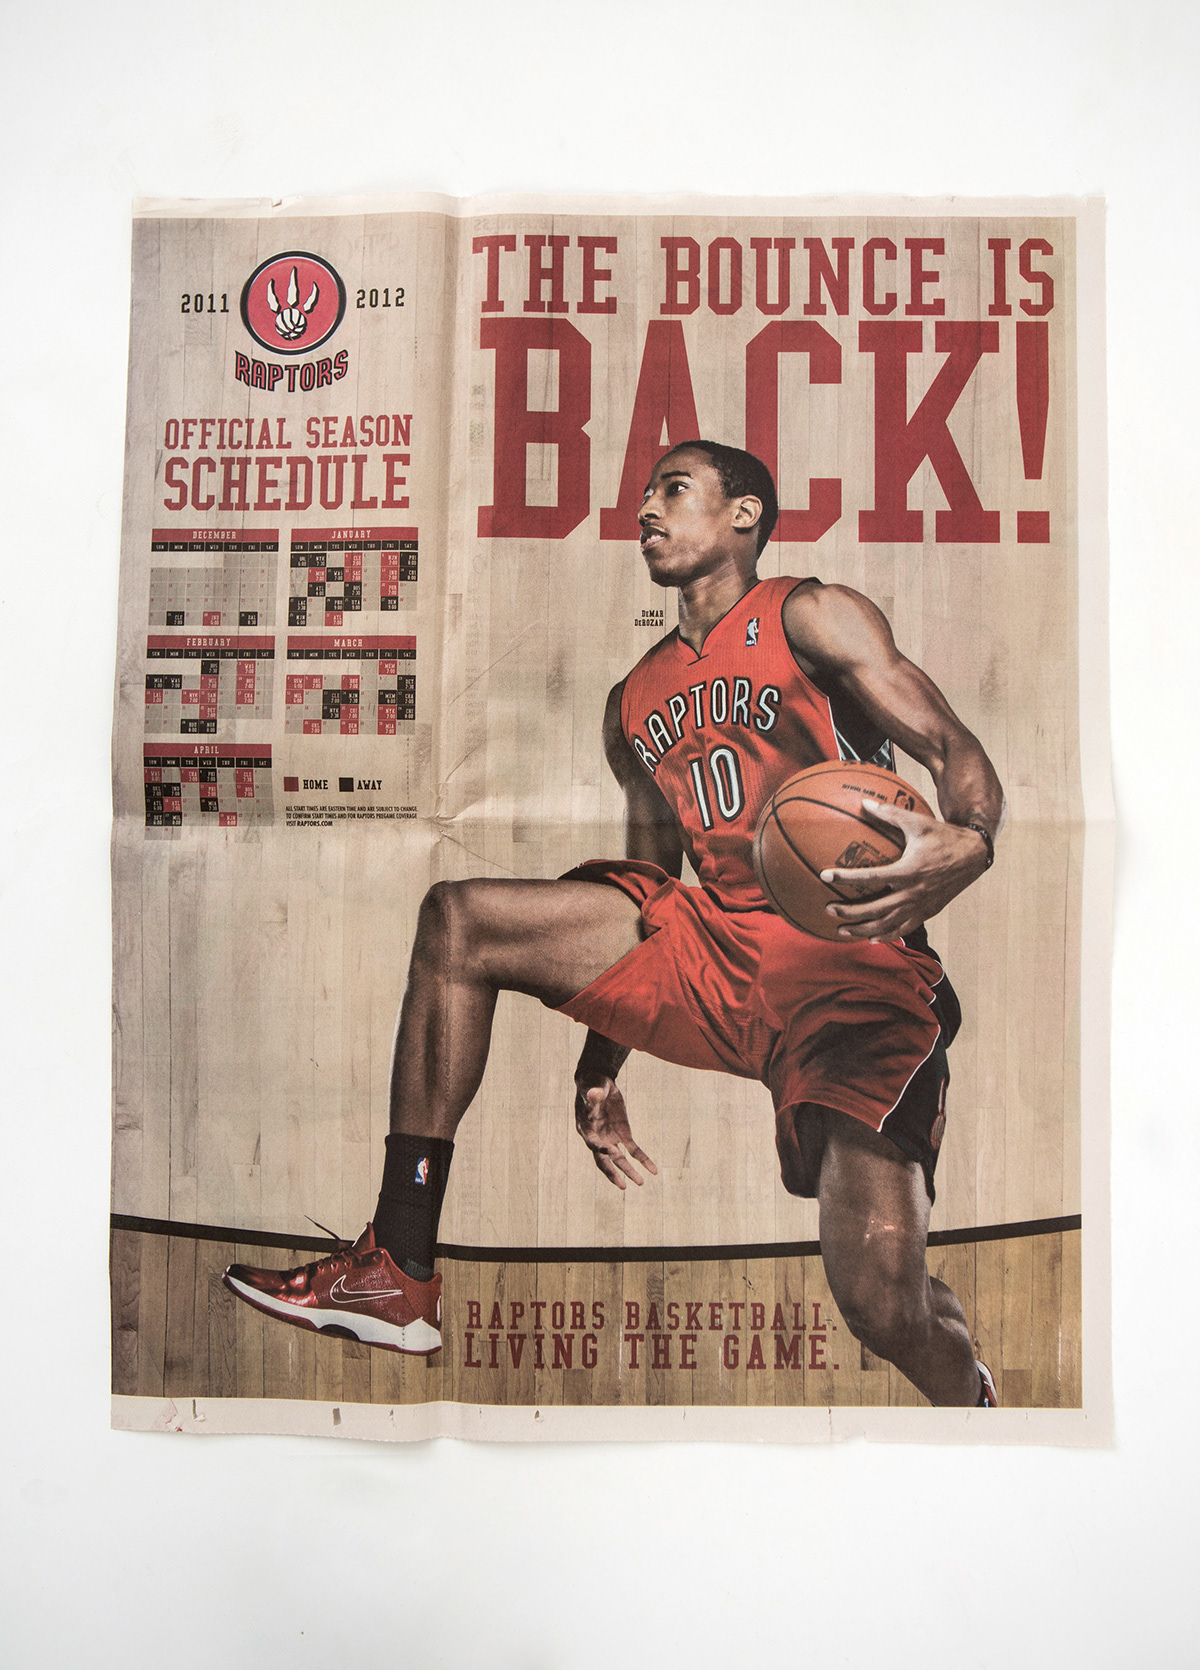 Toronto Raptors "Bounce is Back" Campaign